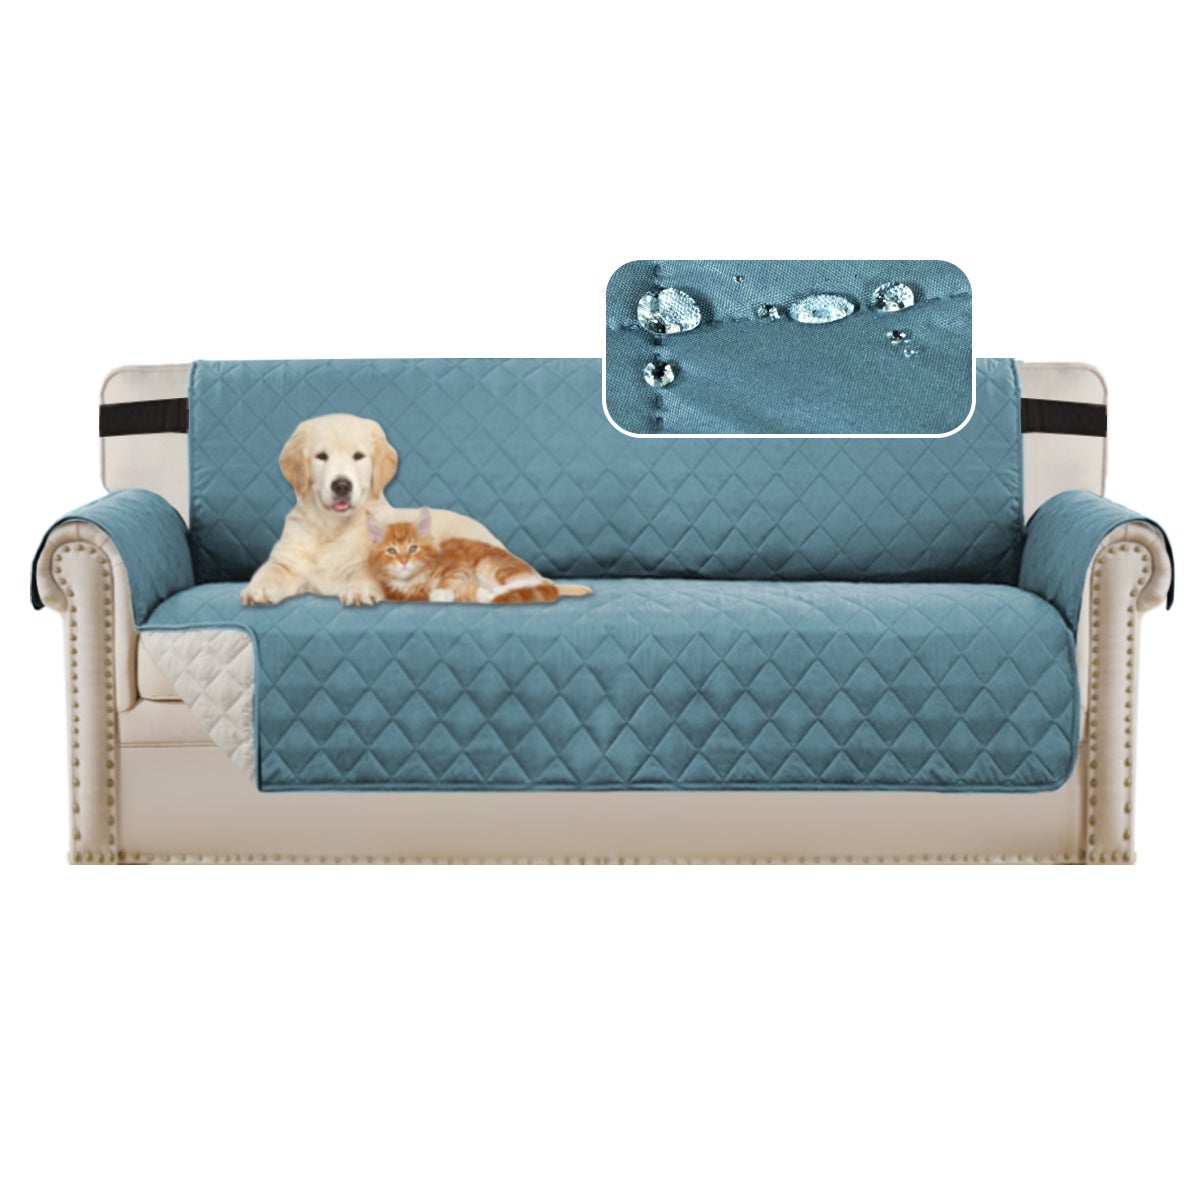 1/2/3 Recliner Water Prevent Pet Friendly Plush Reversible Furniture Sofa cover